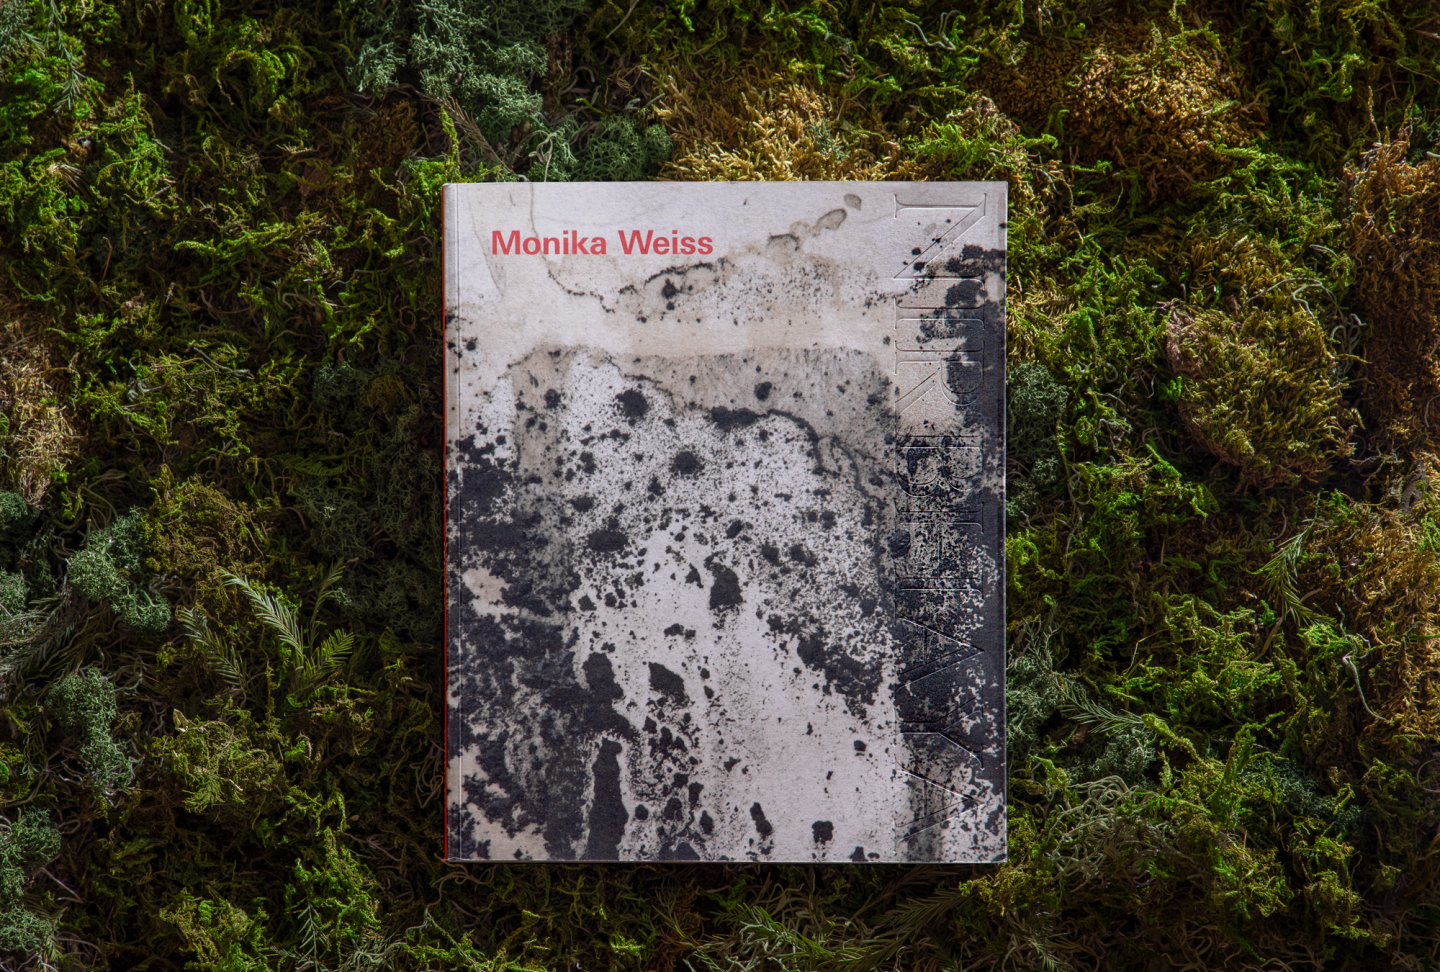 Katalog Monika Weiss. Nirbhaya, fot.Irina Pavlova i Patrick Lanham